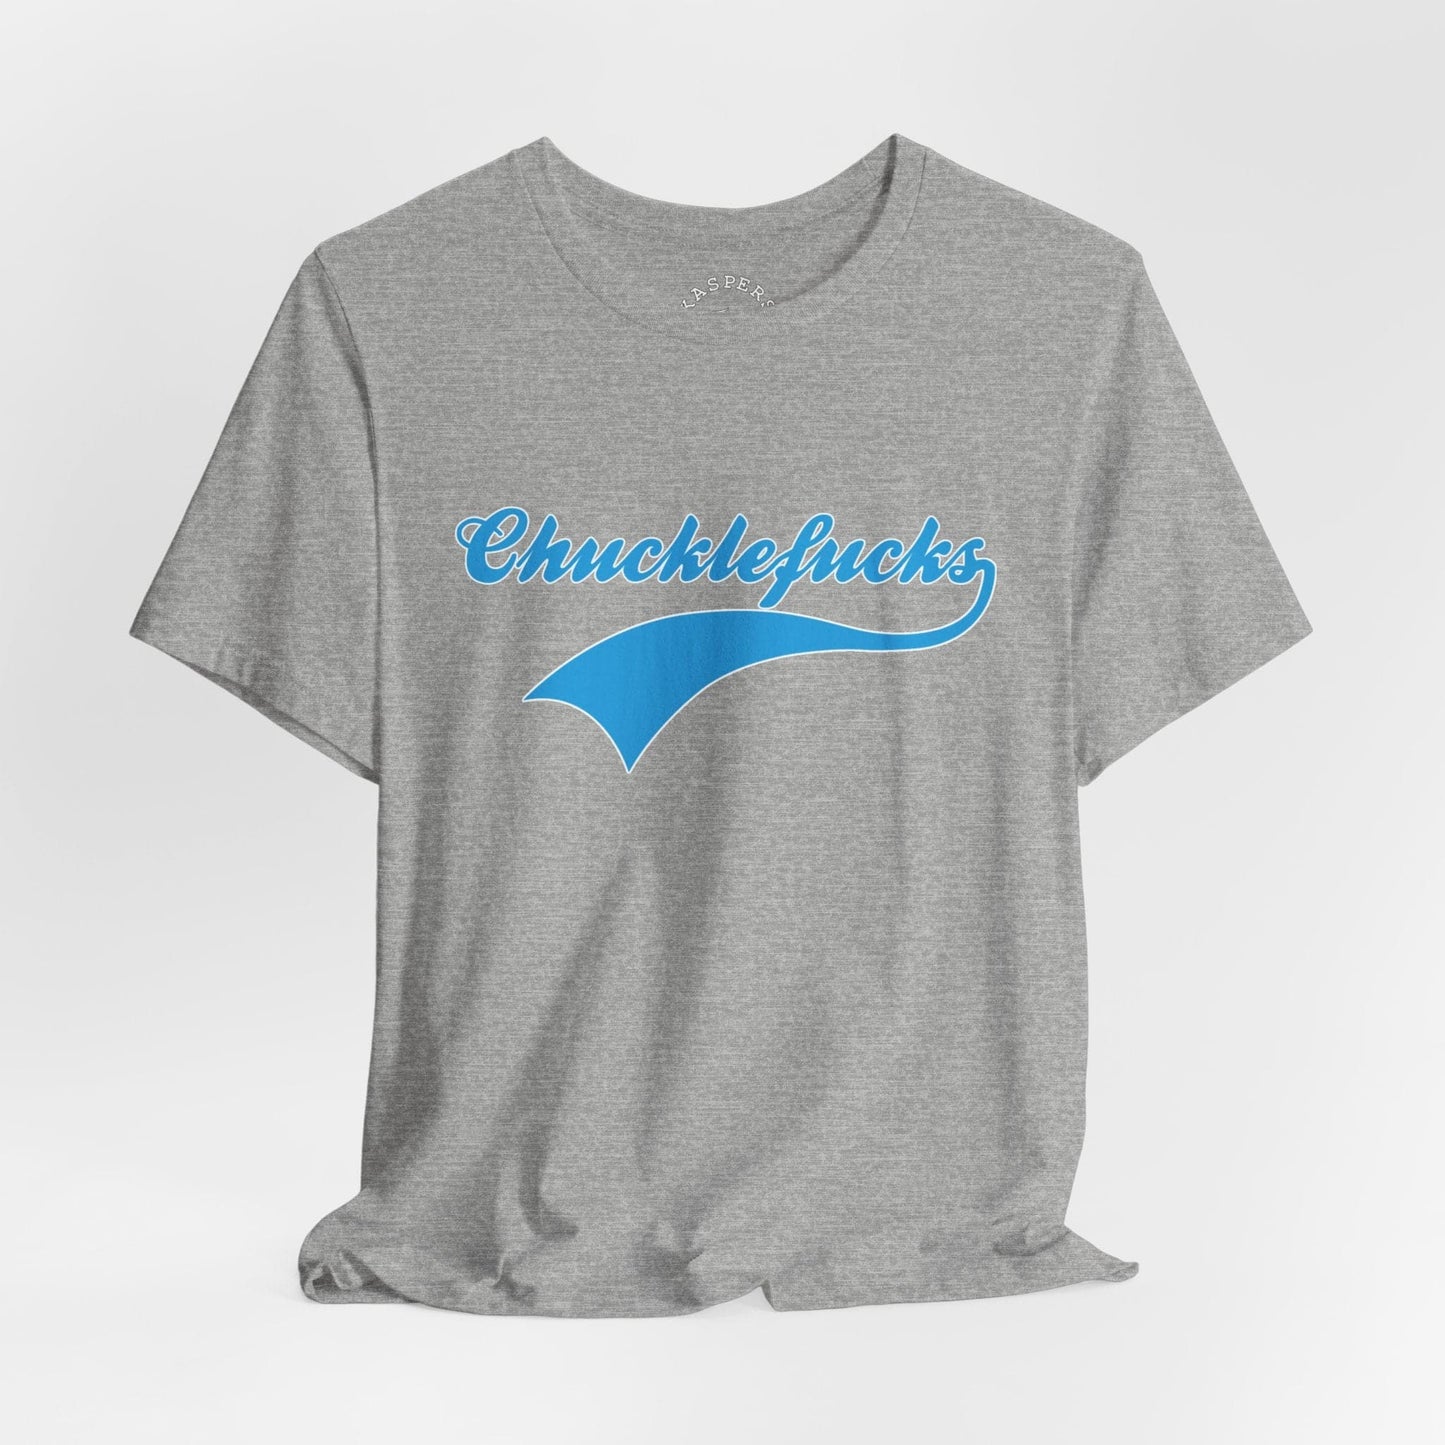 Chucklefucks T-Shirt